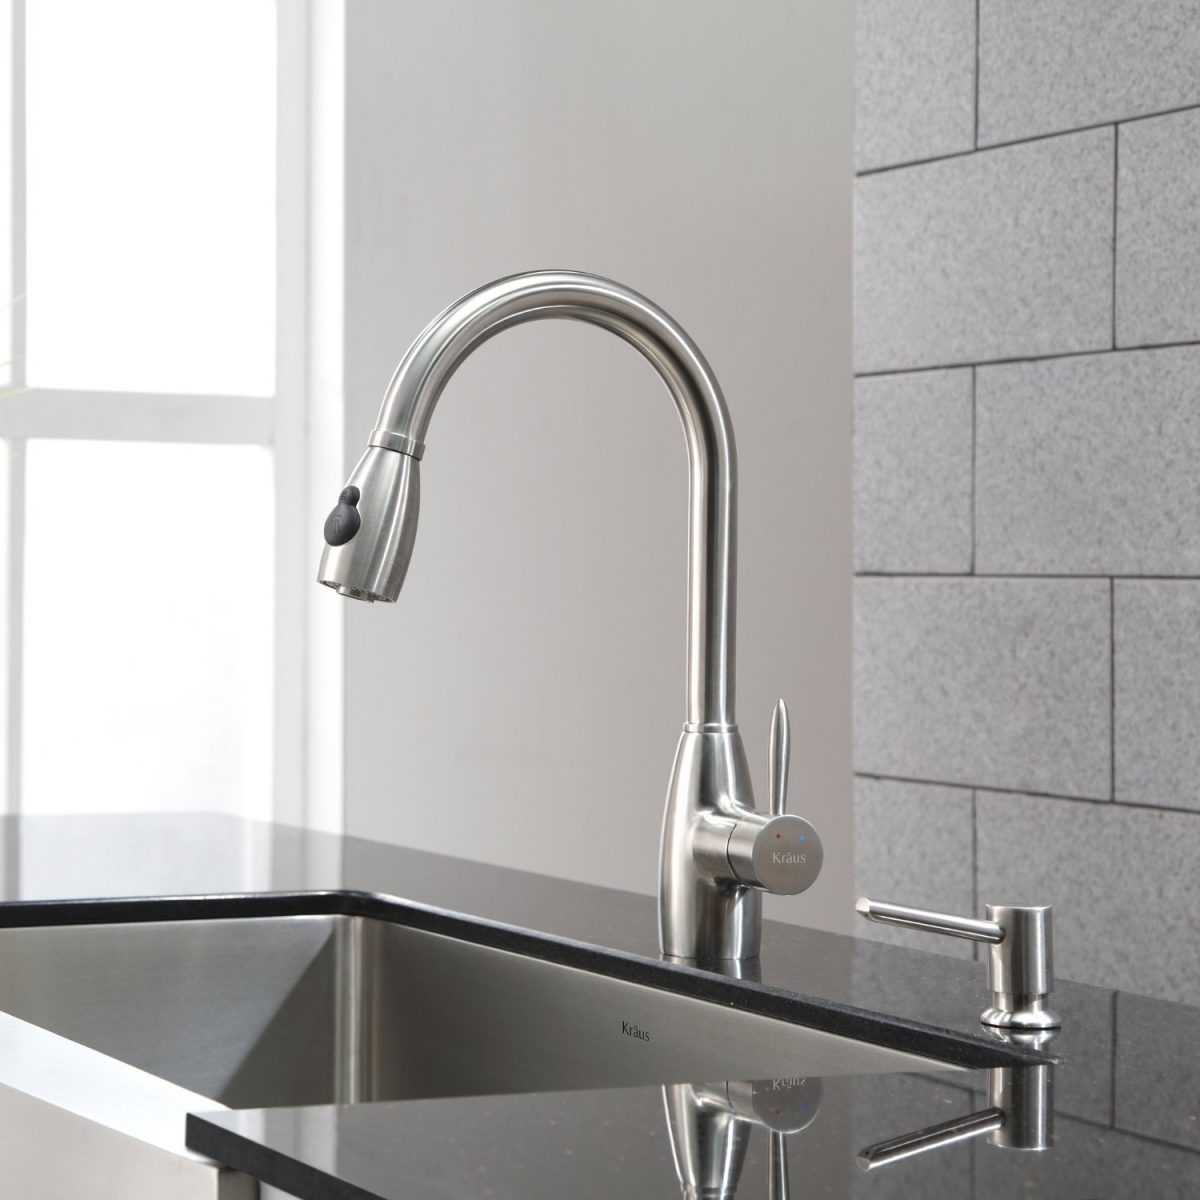 vinnata kitchen sink with kohler kitchen sink faucet single handle